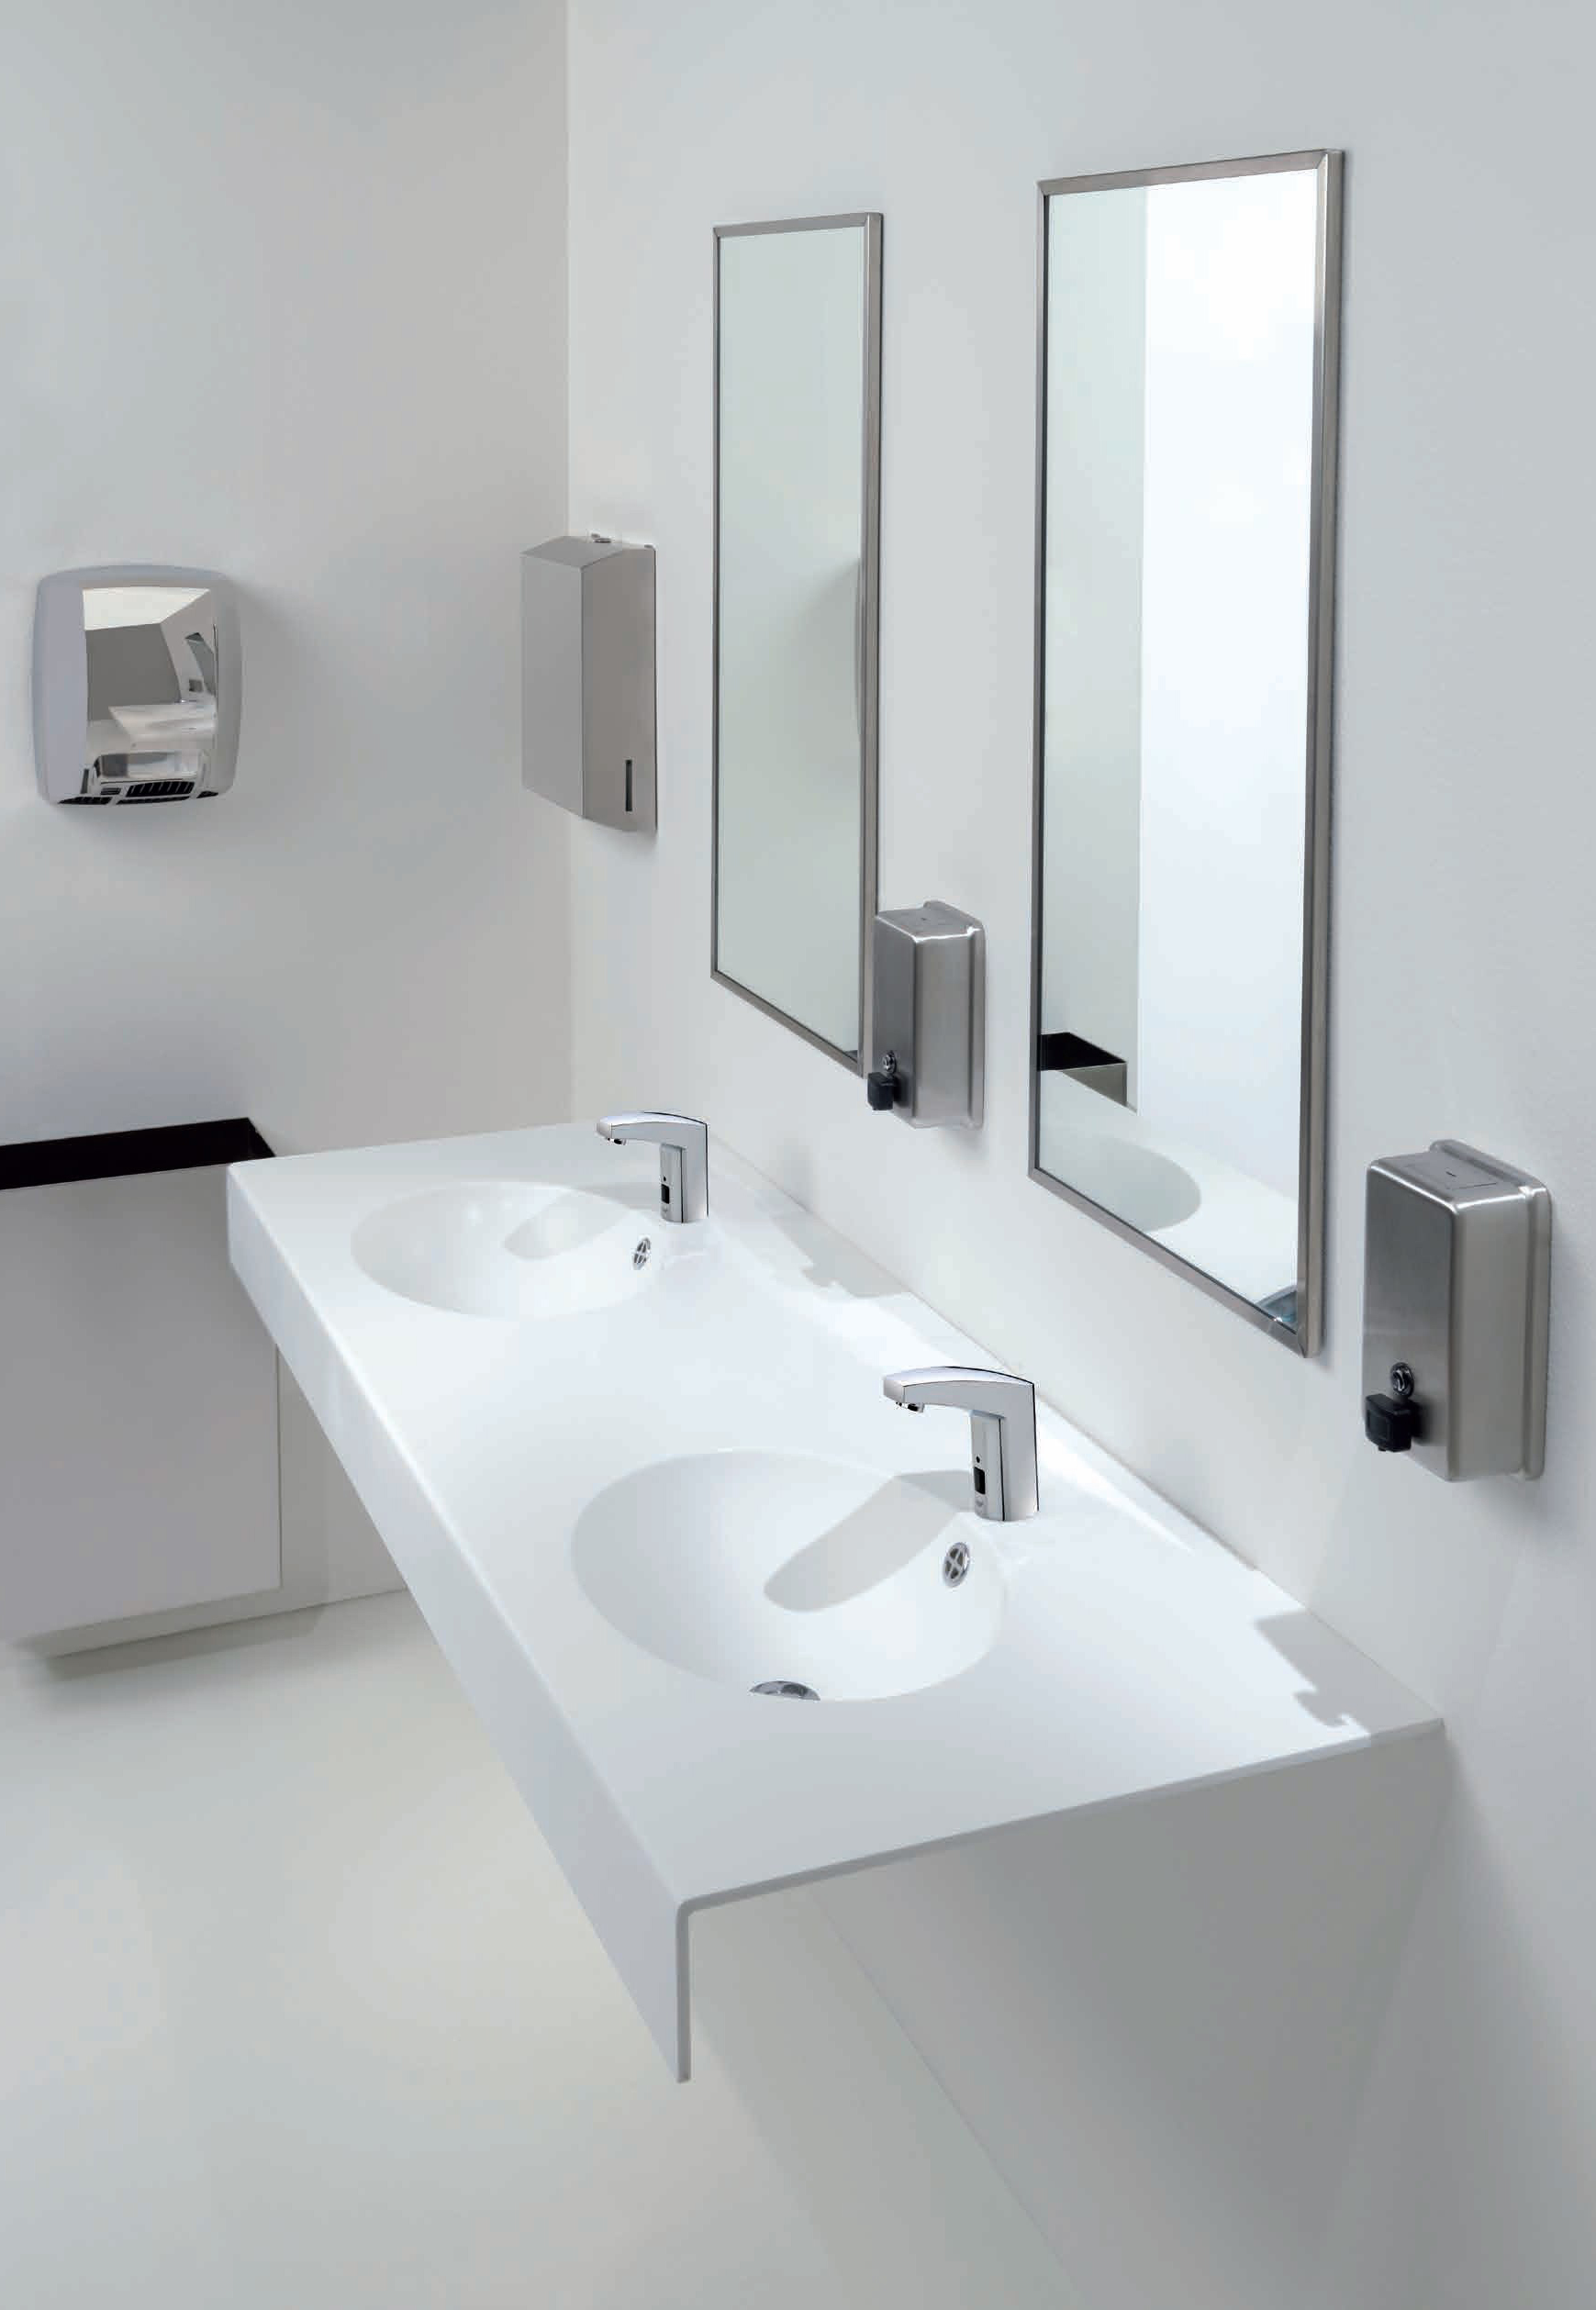 Buy Solid Surface Corian Bathroom Countertop Online Price